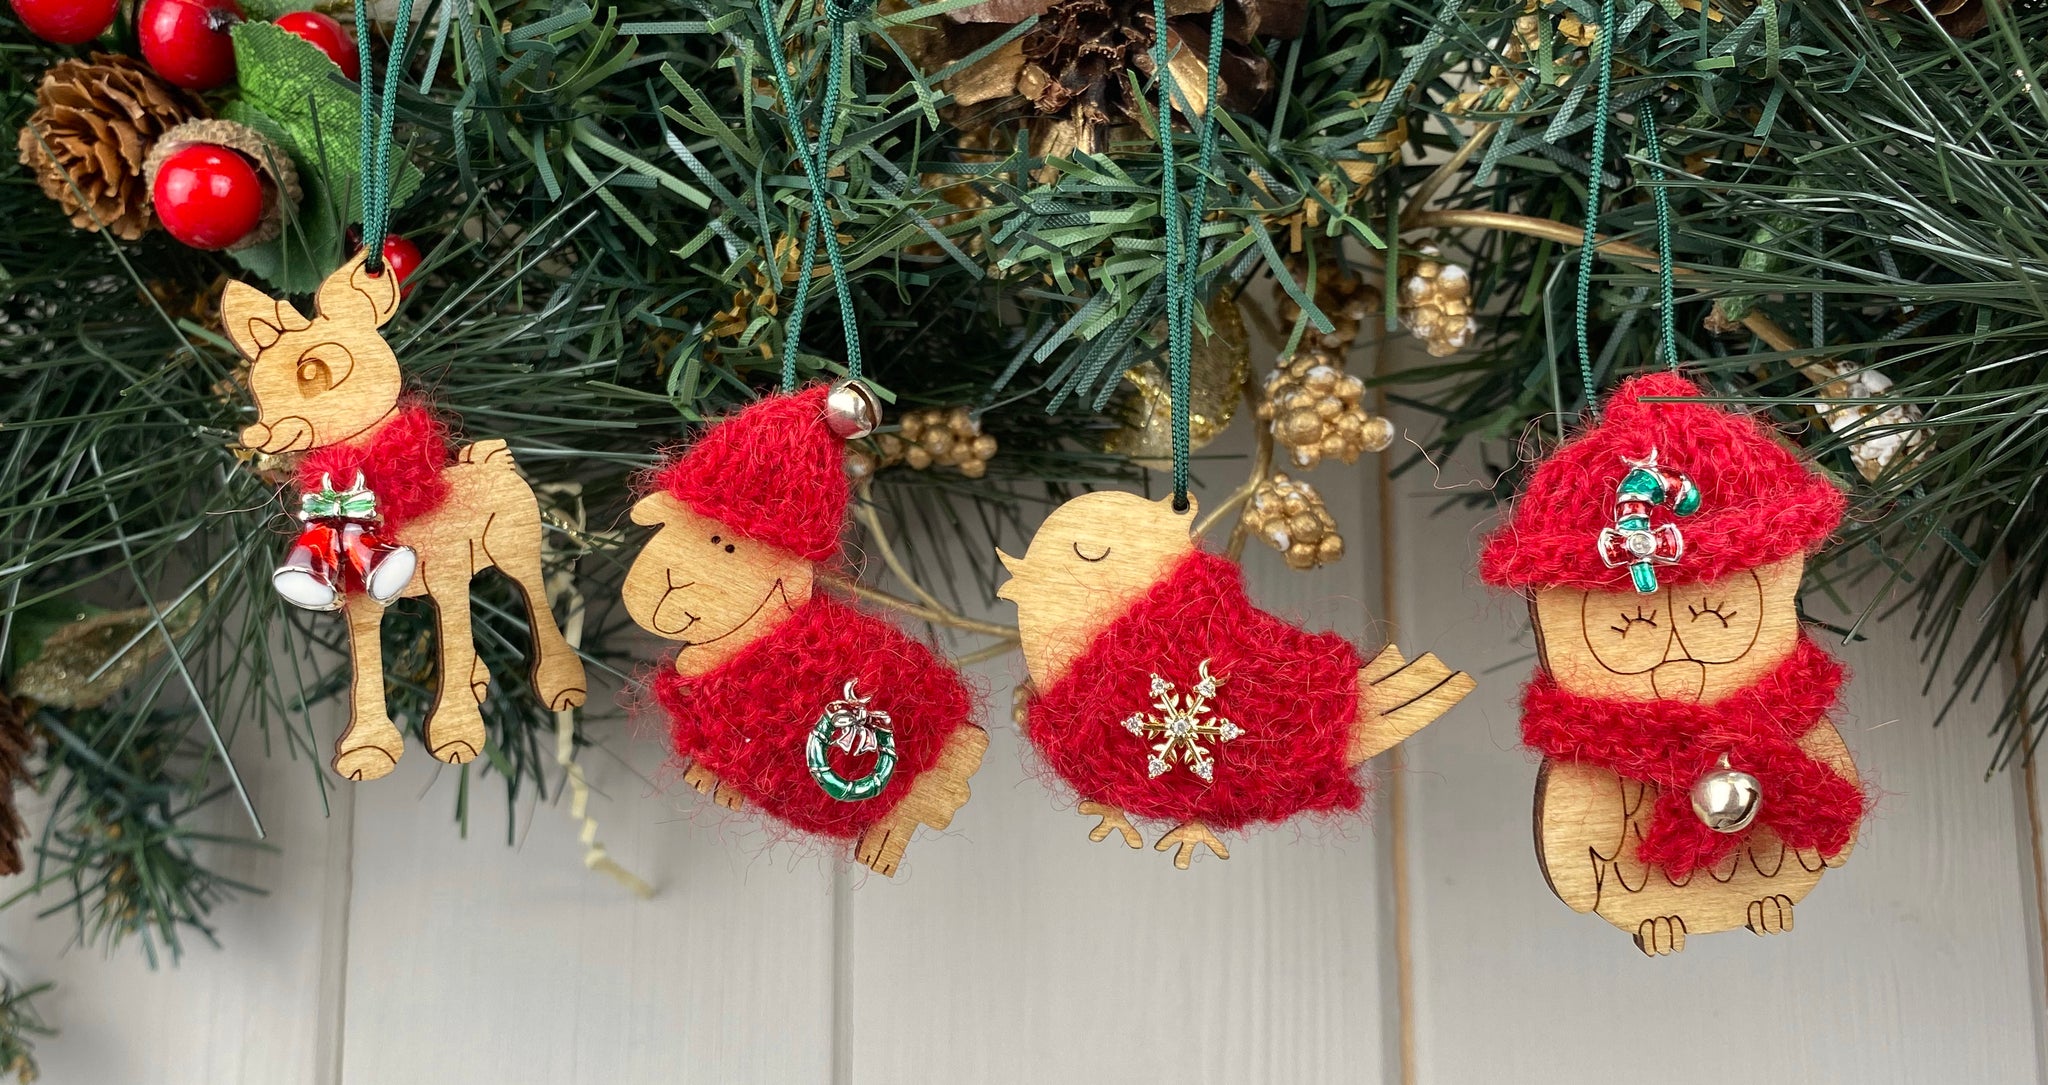 Mini Christmas Decoration Knitting Kit Gift Box - Classic Selection